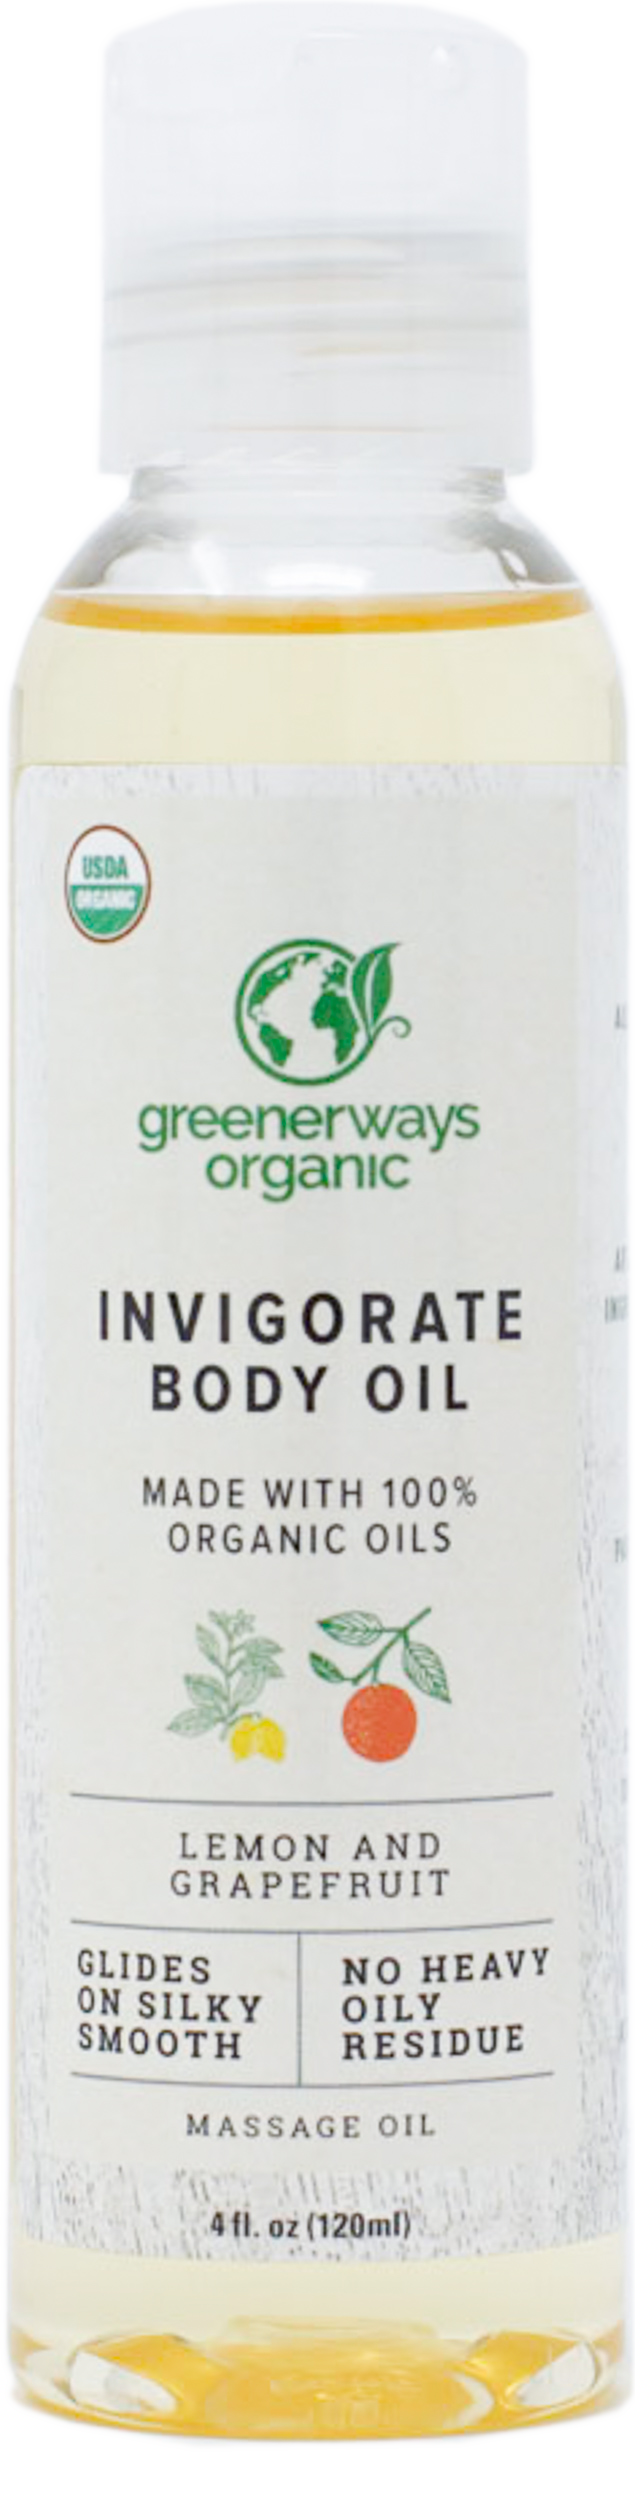 Greenerways Organic Invigorate Body Oil (4oz)